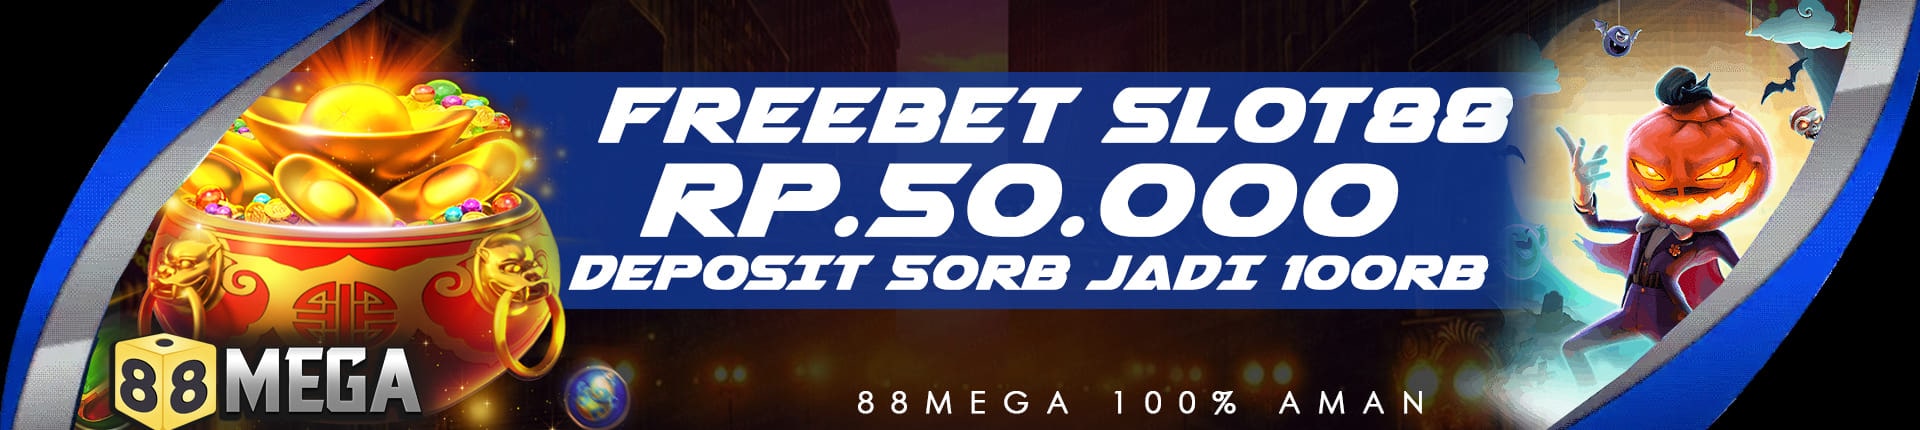 freebet slot88